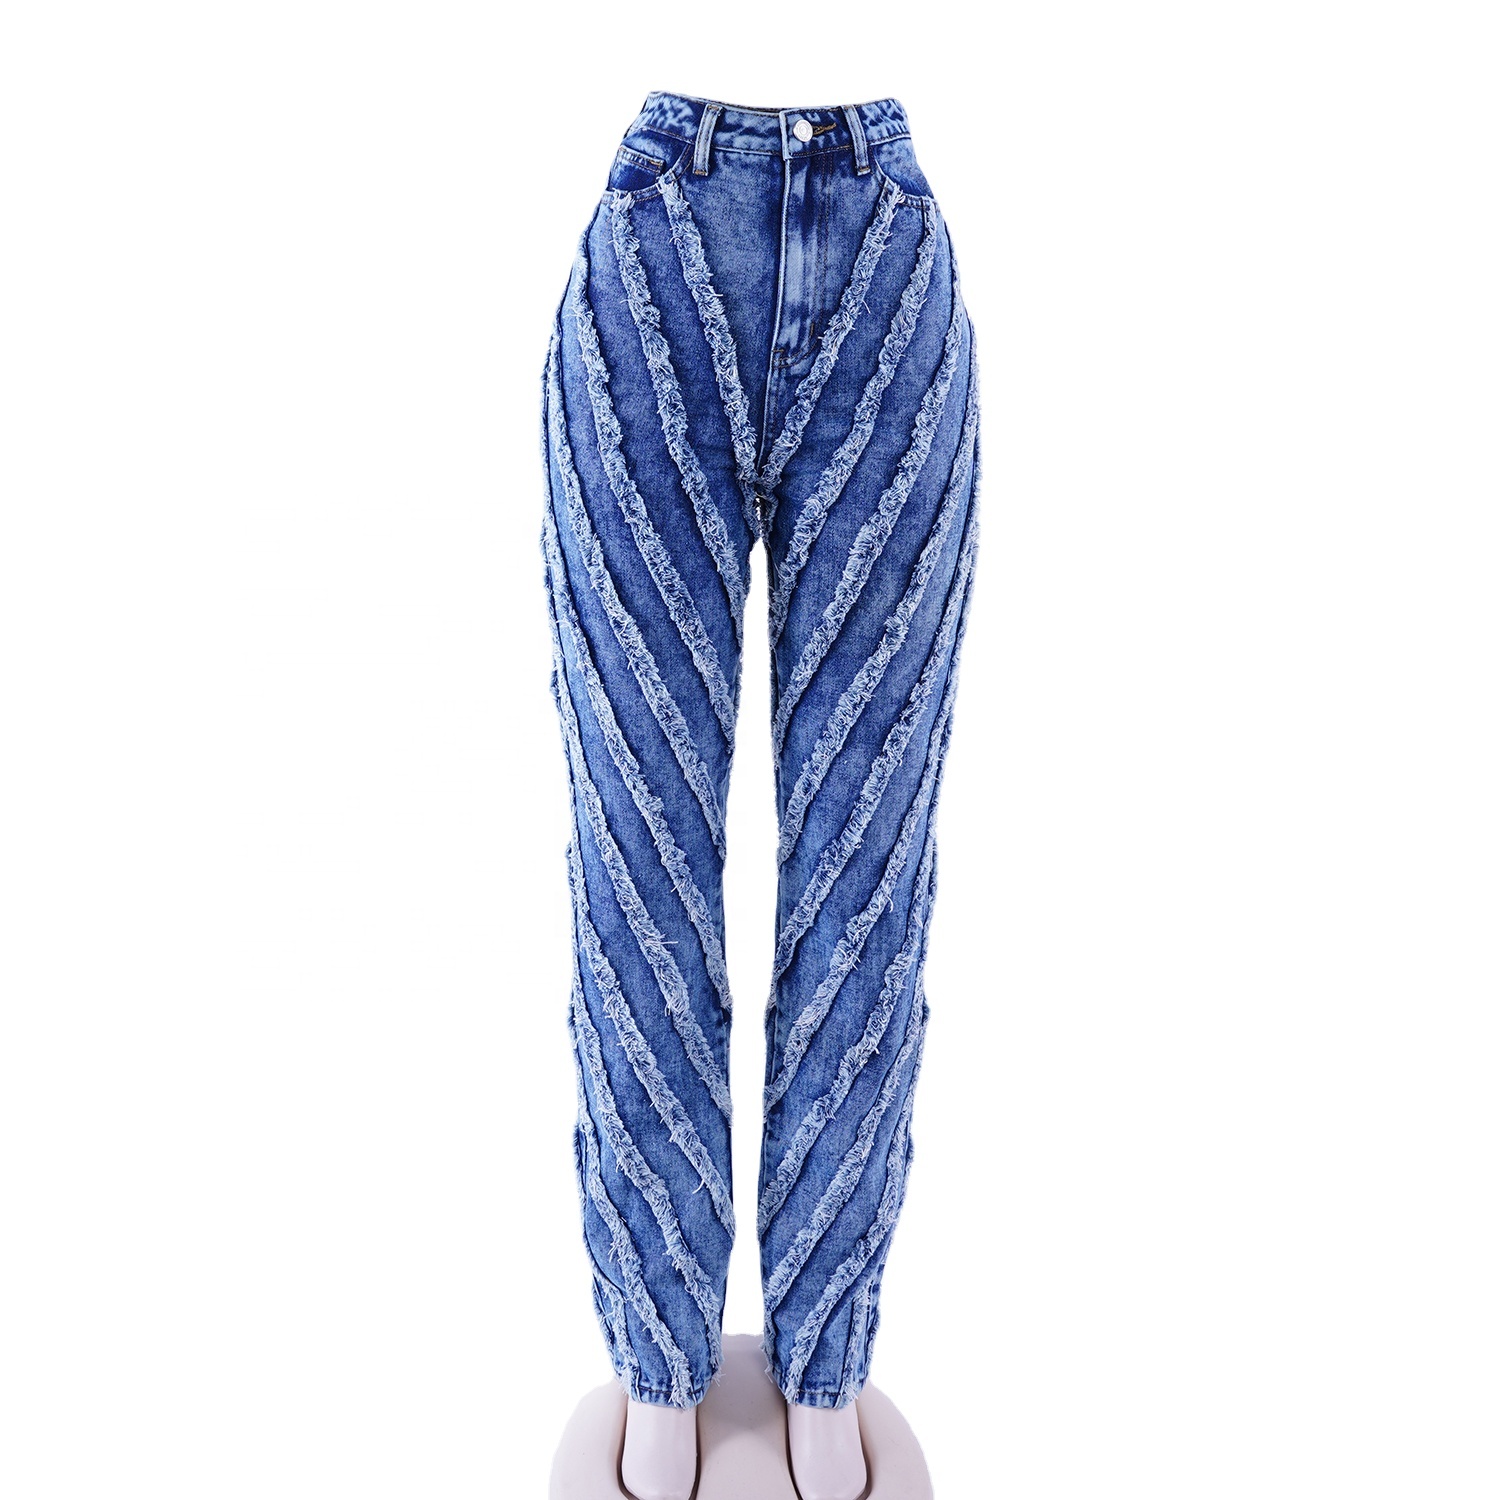 SKYKINGDOM special design wholesale women jeans blue high waisted tassel stripes bootcut jeans for women